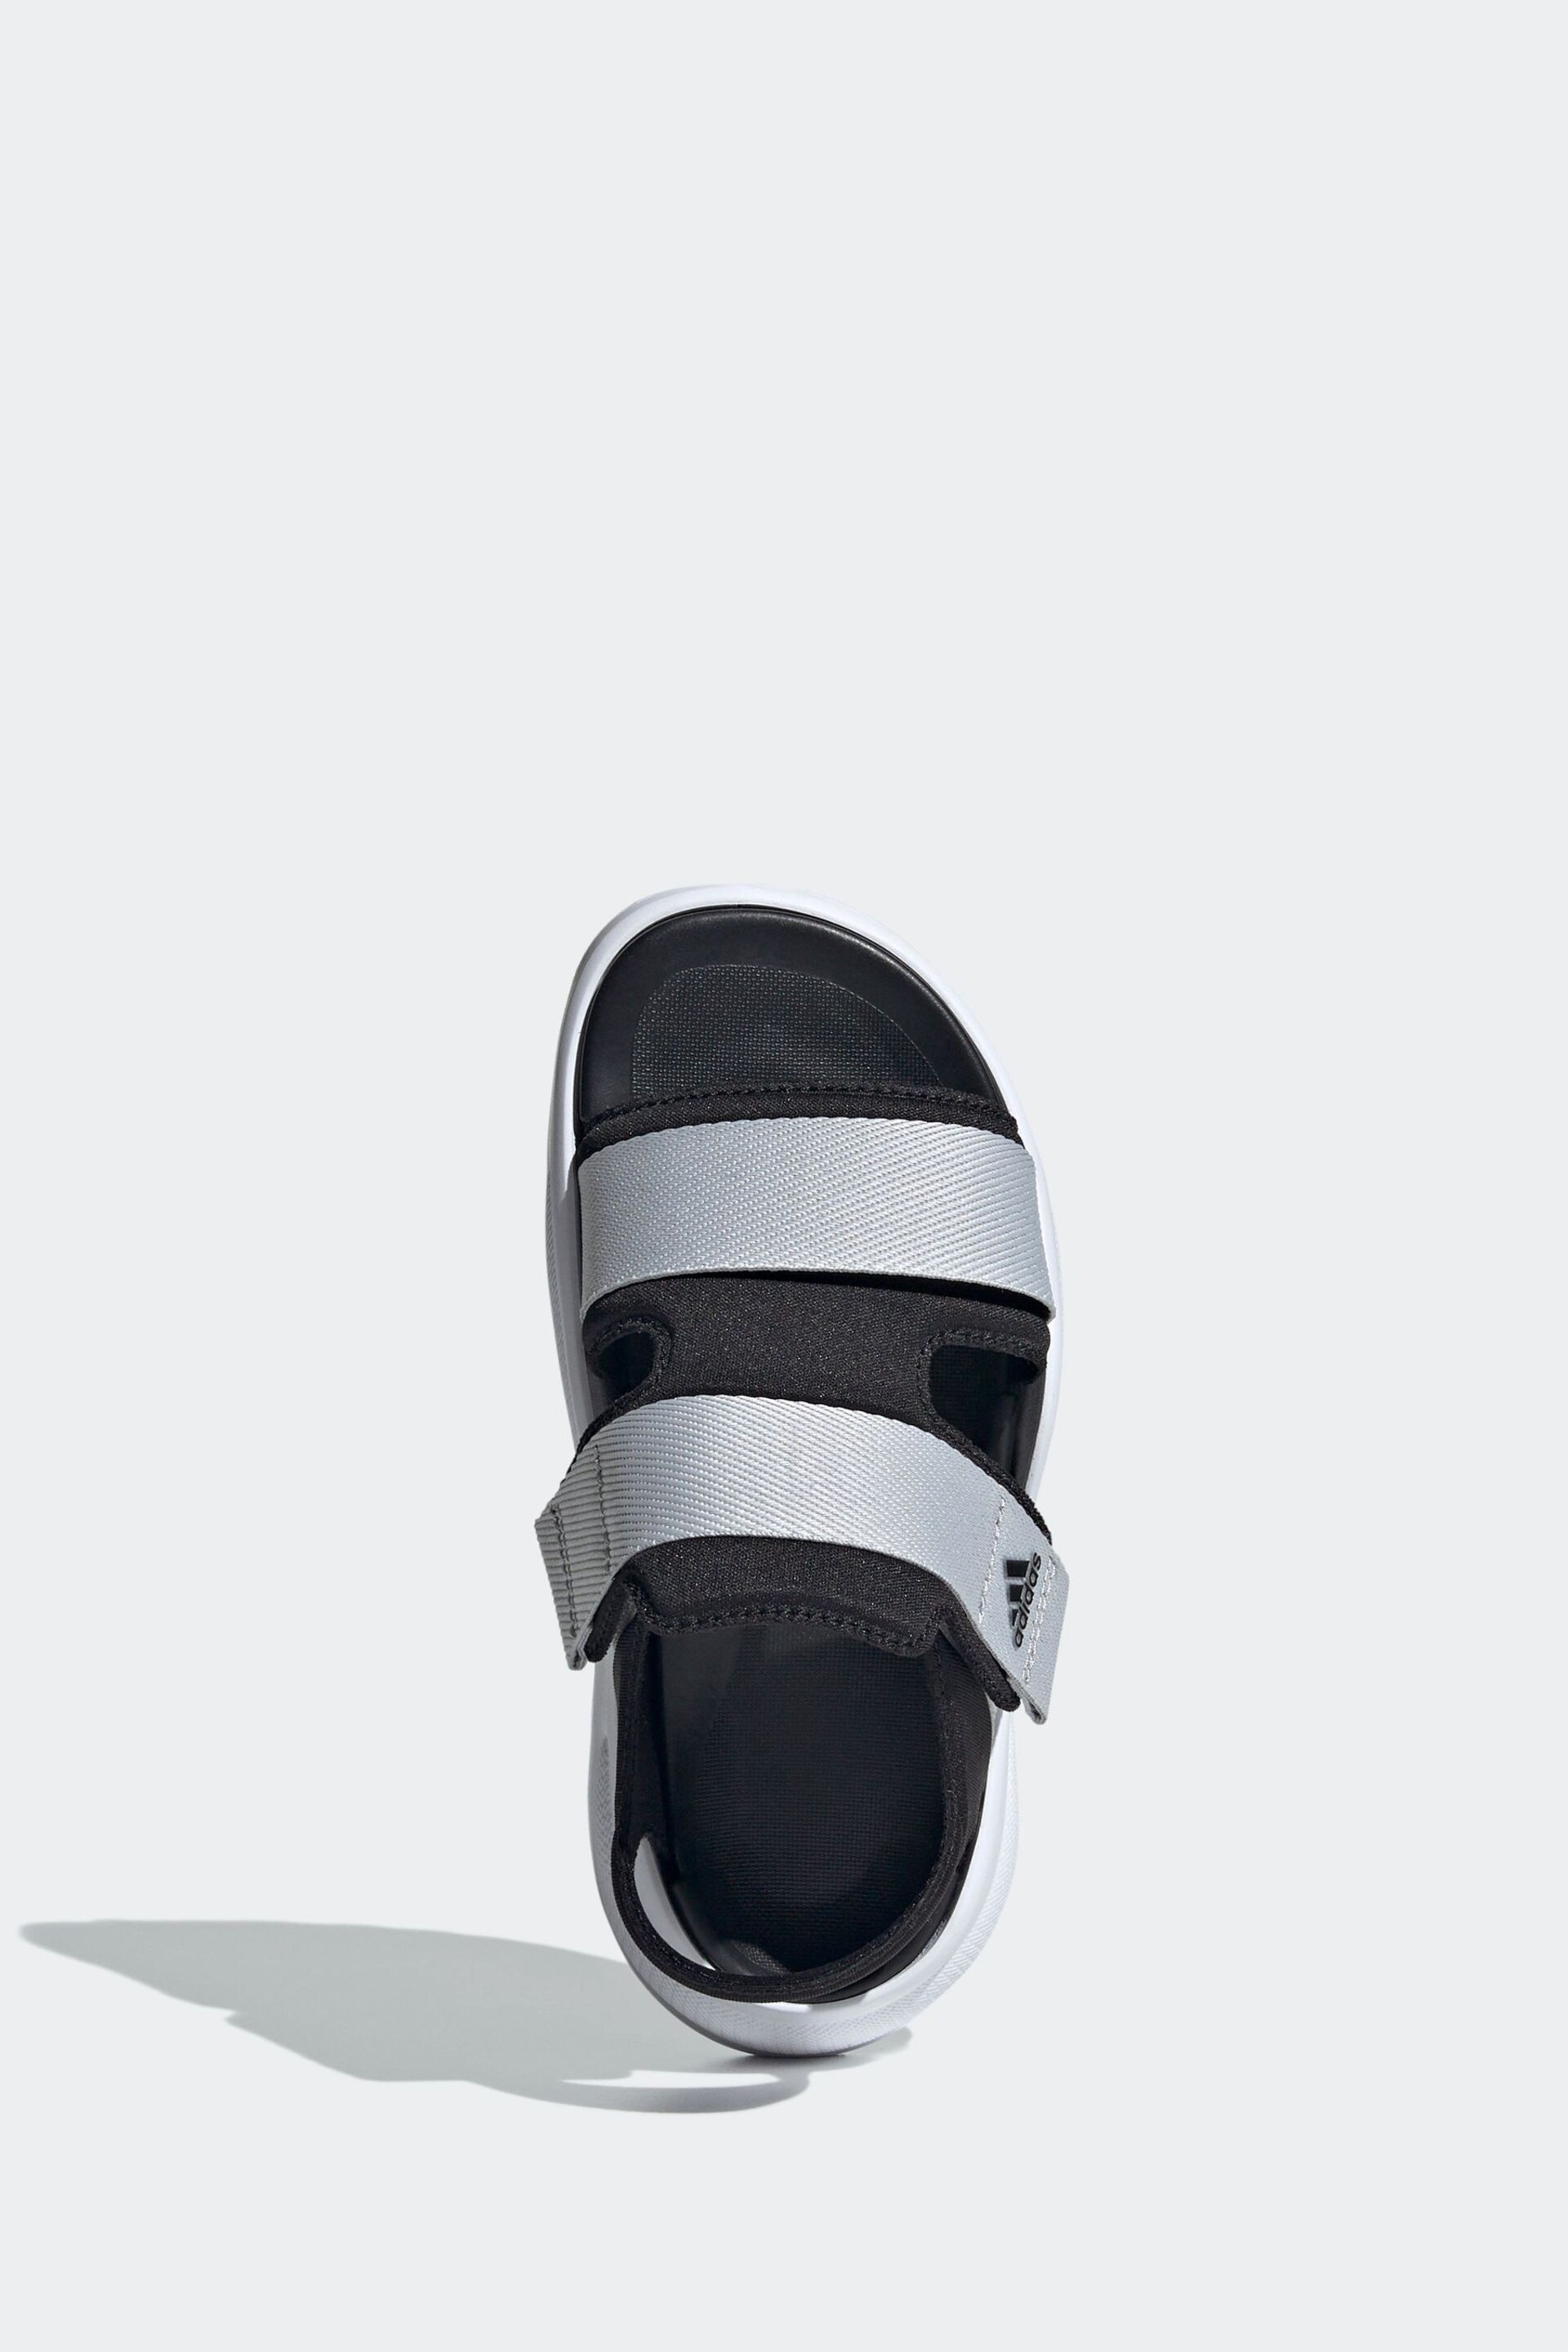 adidas Black Kids Mehana Sandals - Image 5 of 8